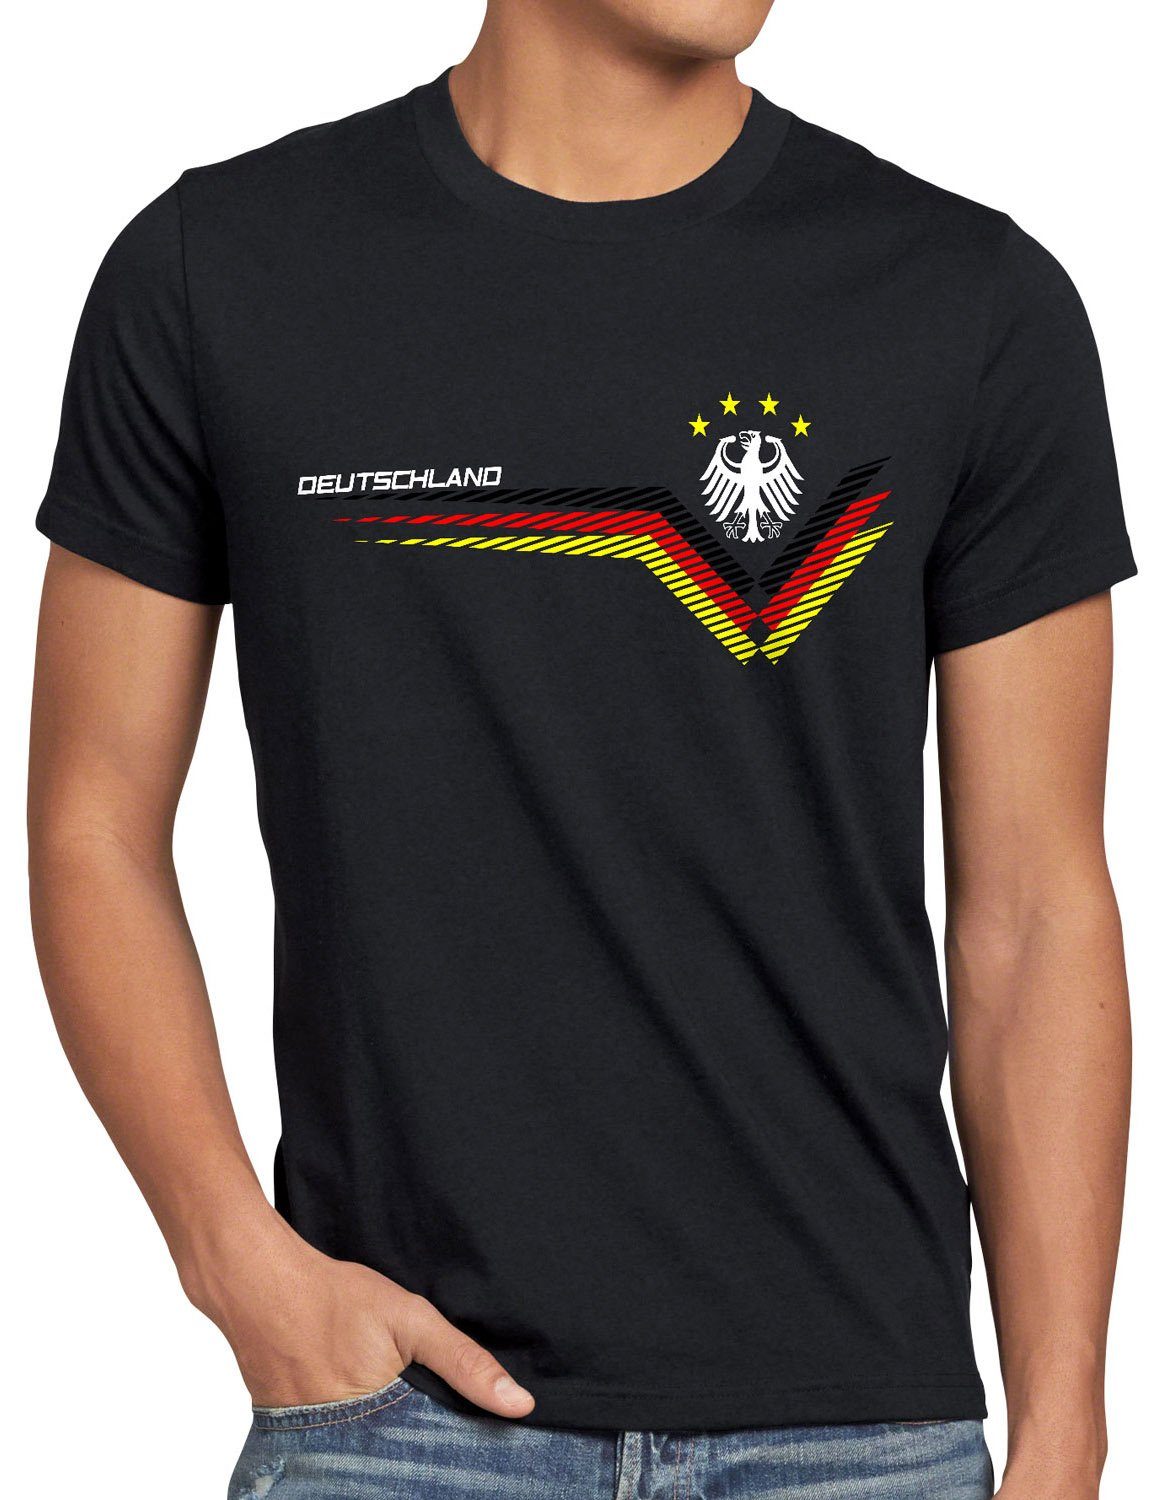 EM Trikot Germany Katar Print-Shirt Fussball schwarz Weltmeisterschaft T-Shirt 2022 Herren Deutschland WM style3